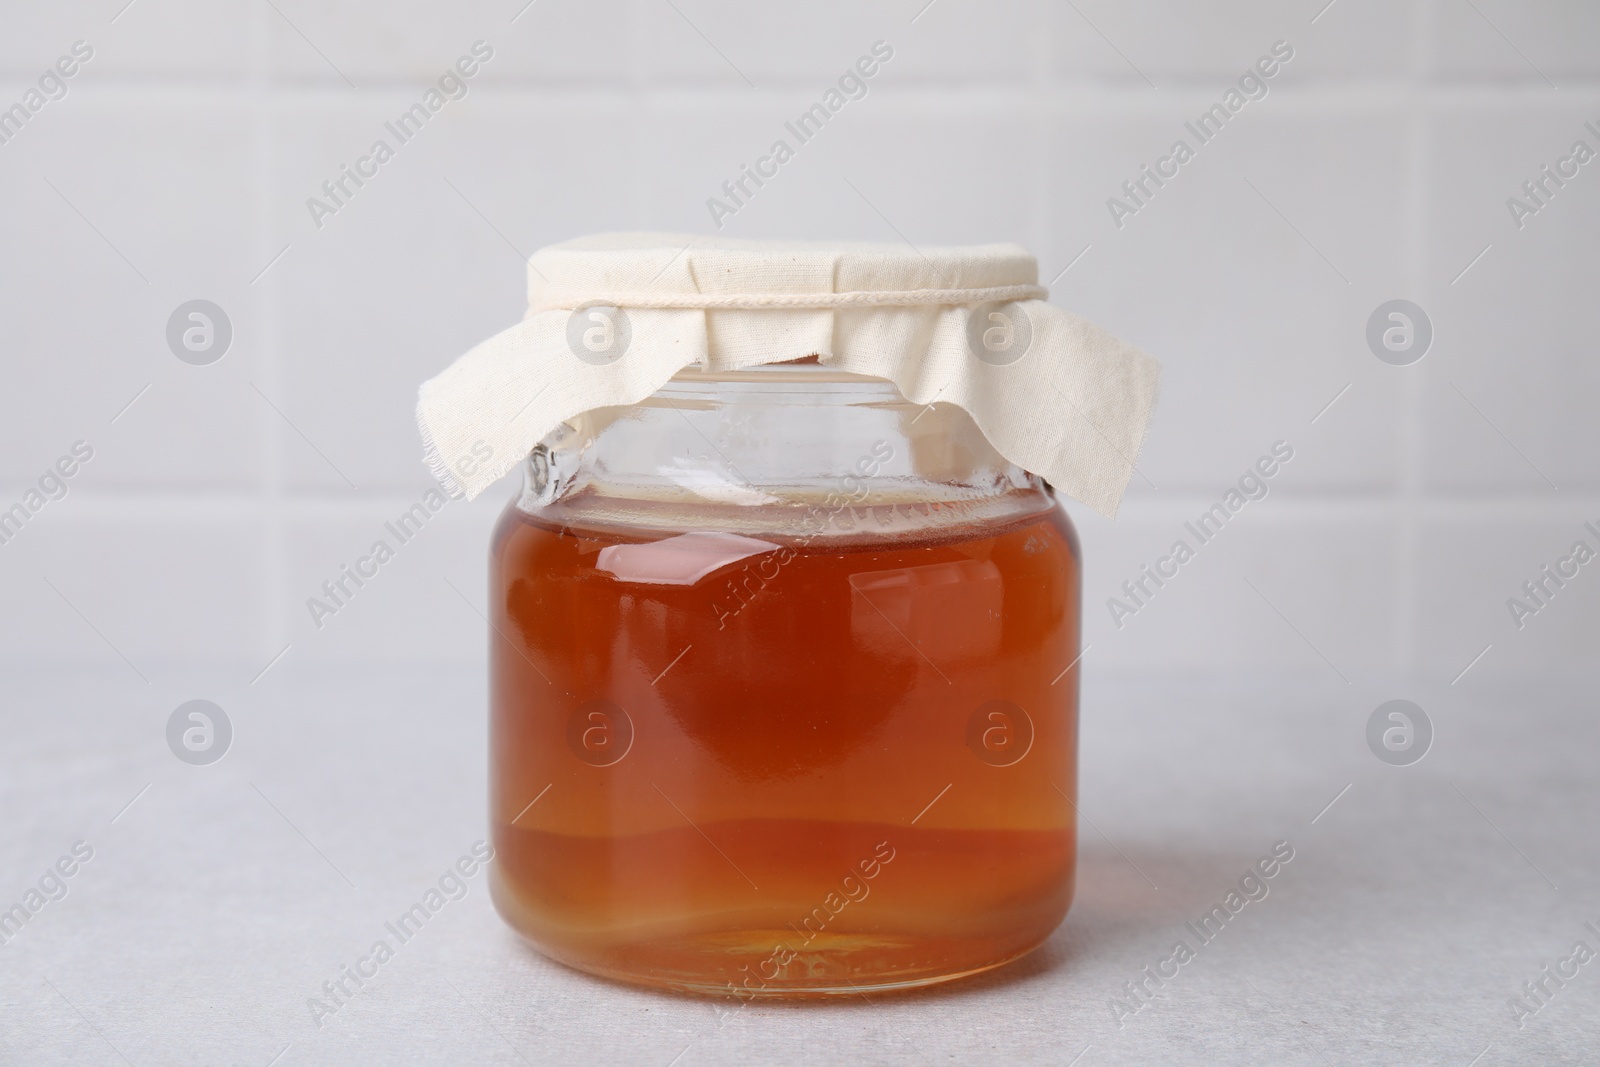 Photo of Tasty kombucha in glass jar on white table